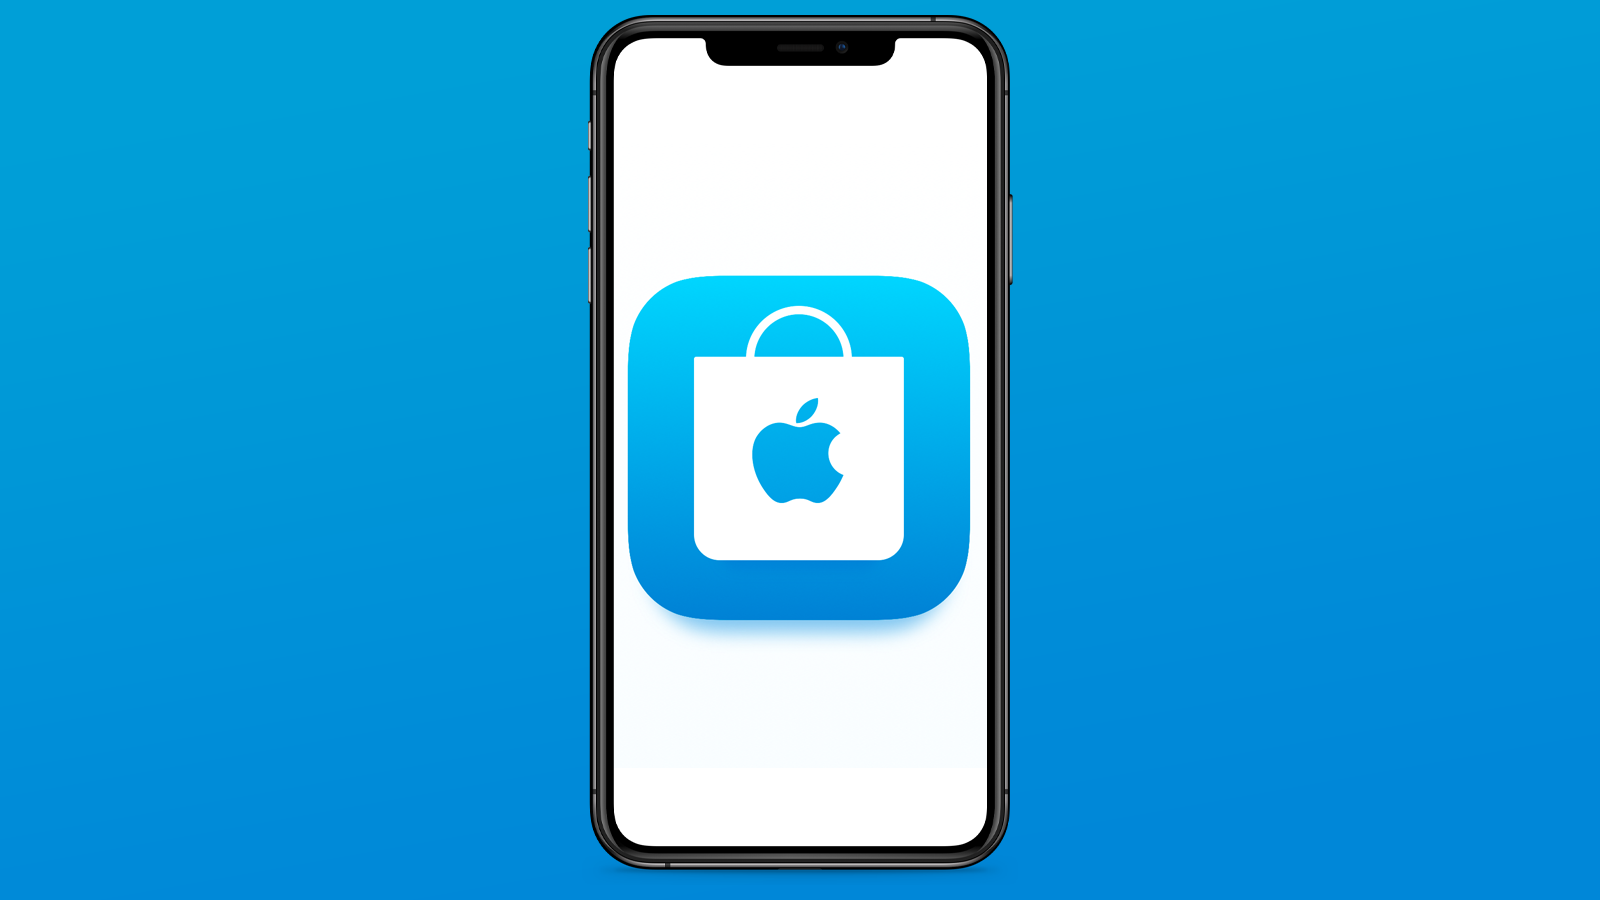 App Store 4 أغسطس 2021 0comments App Store: حذر المطورون من انخفاض الأسعار في أوروبا